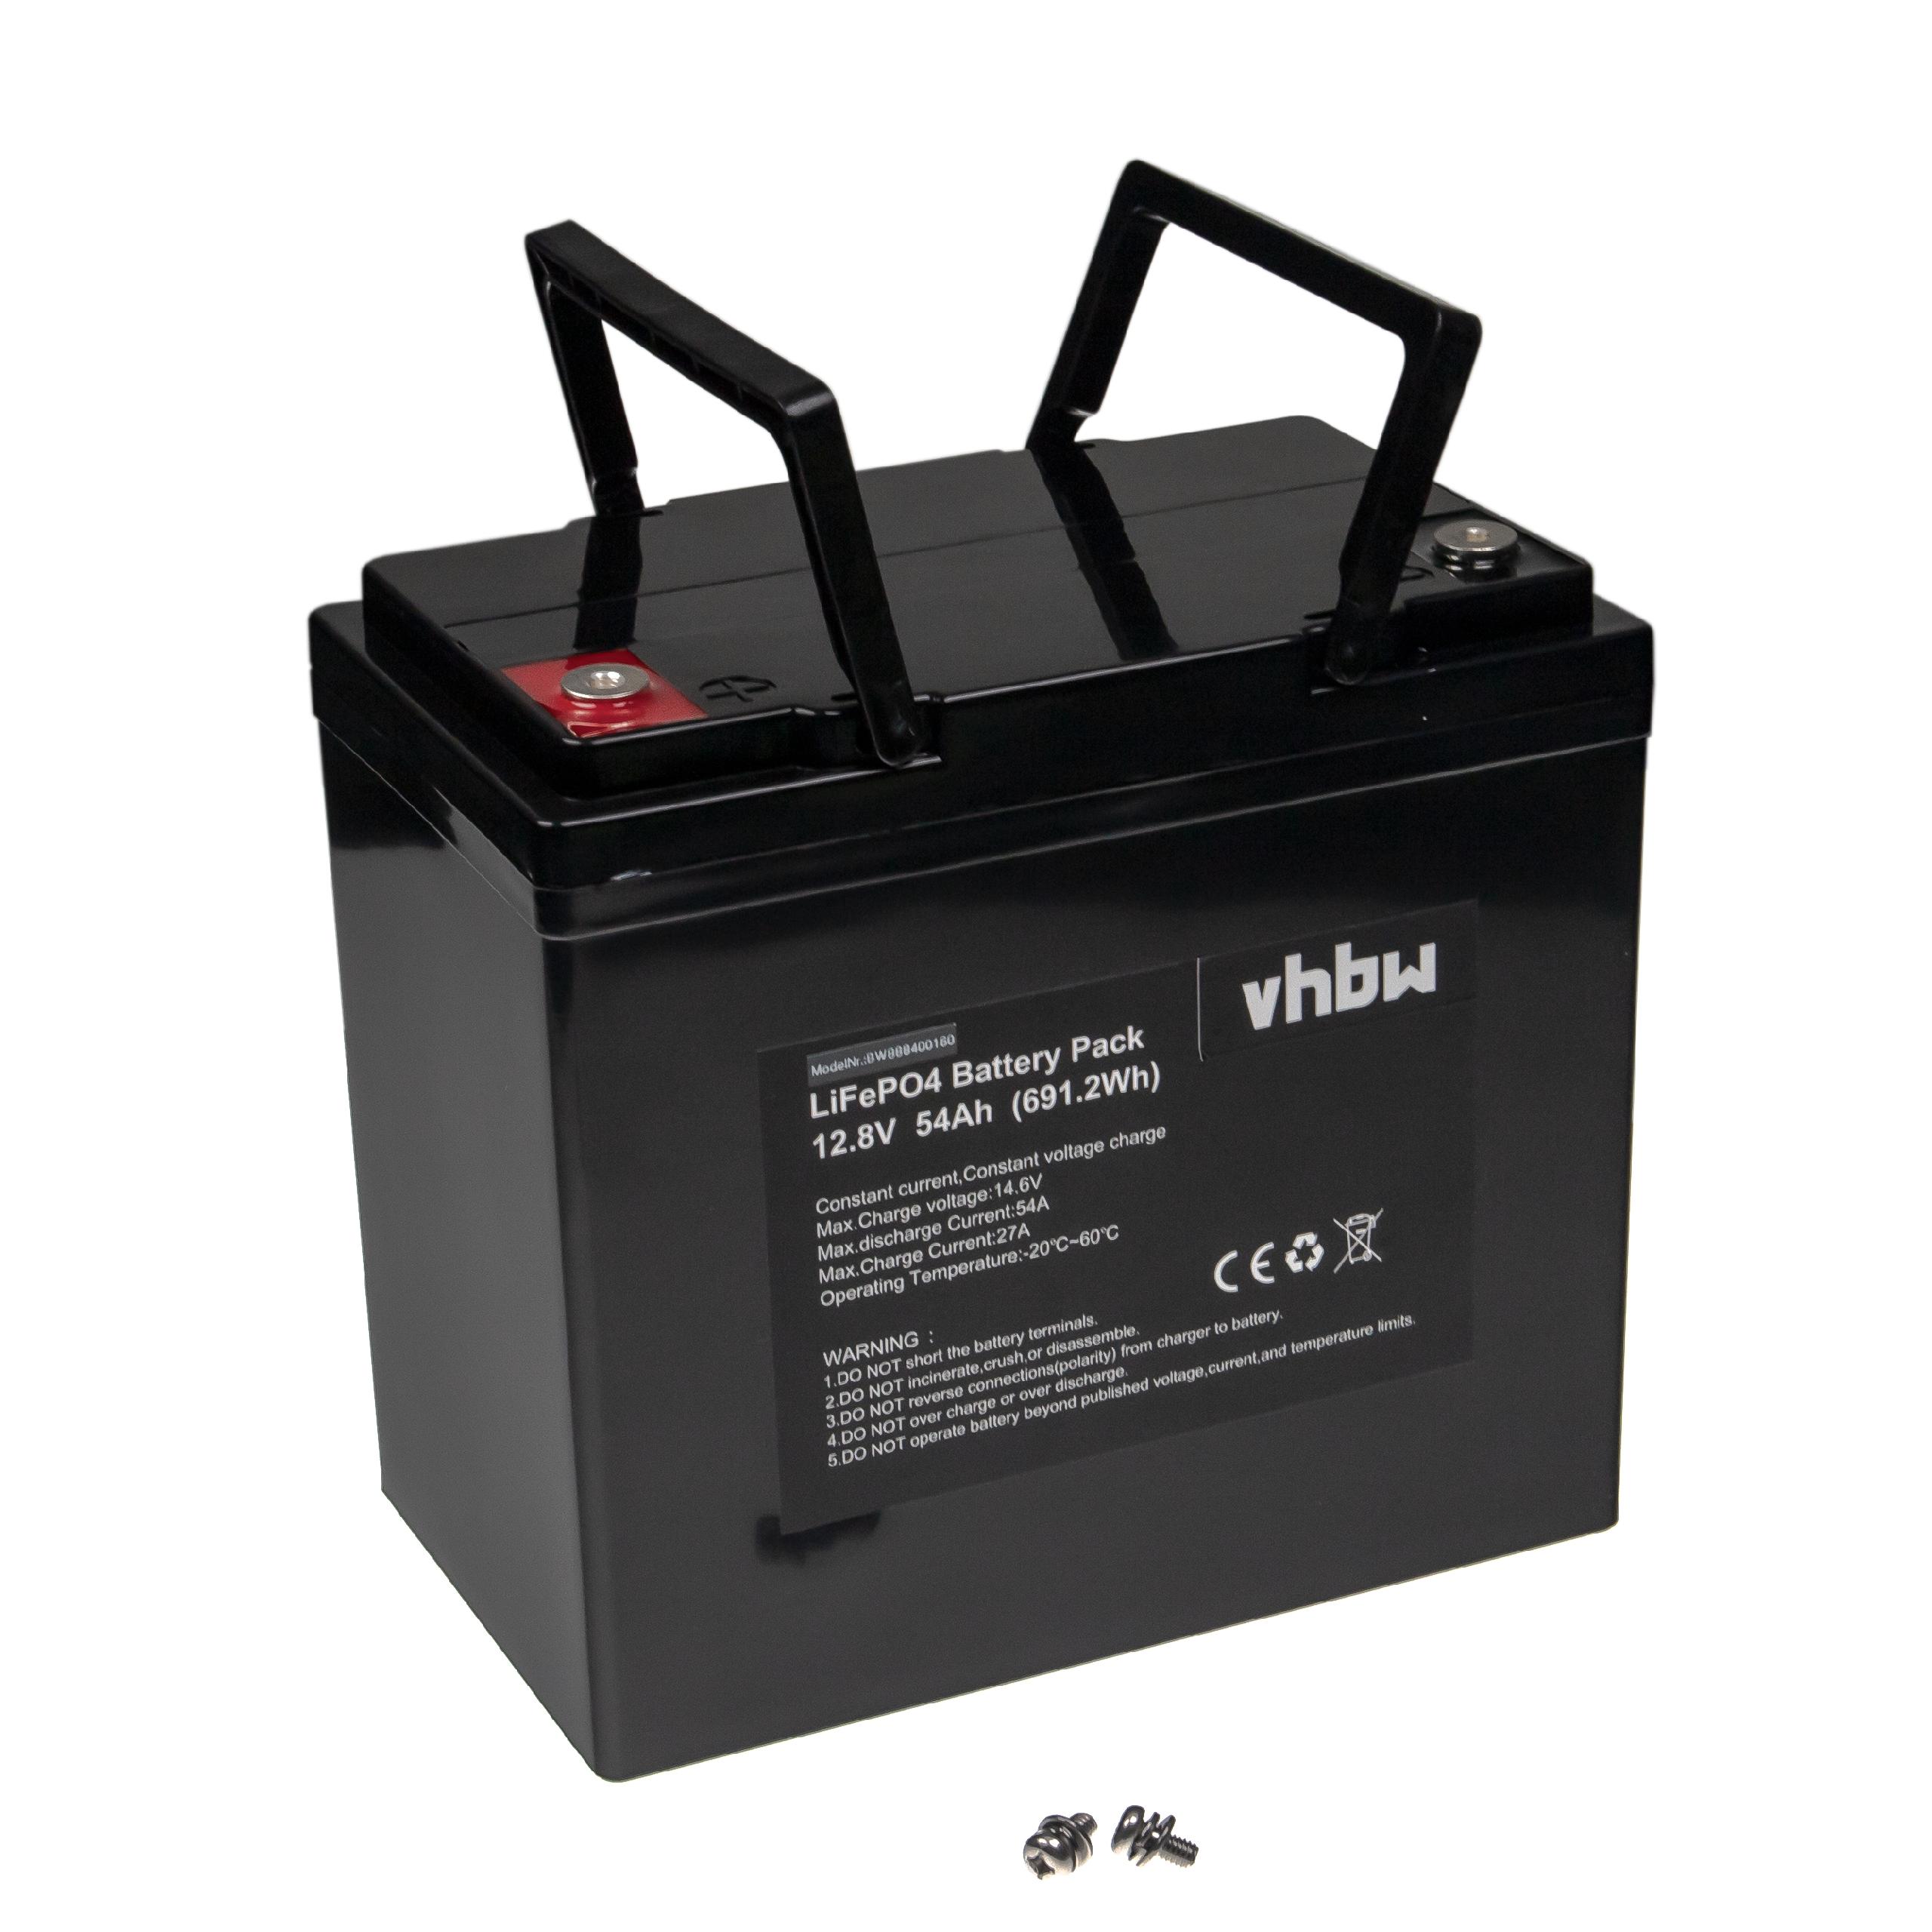 Bordbatterie Akku passend für Wohnmobil, Boot, Solaranlage - 54 Ah 12,8V LiFePO4, 54000mAh, schwarz